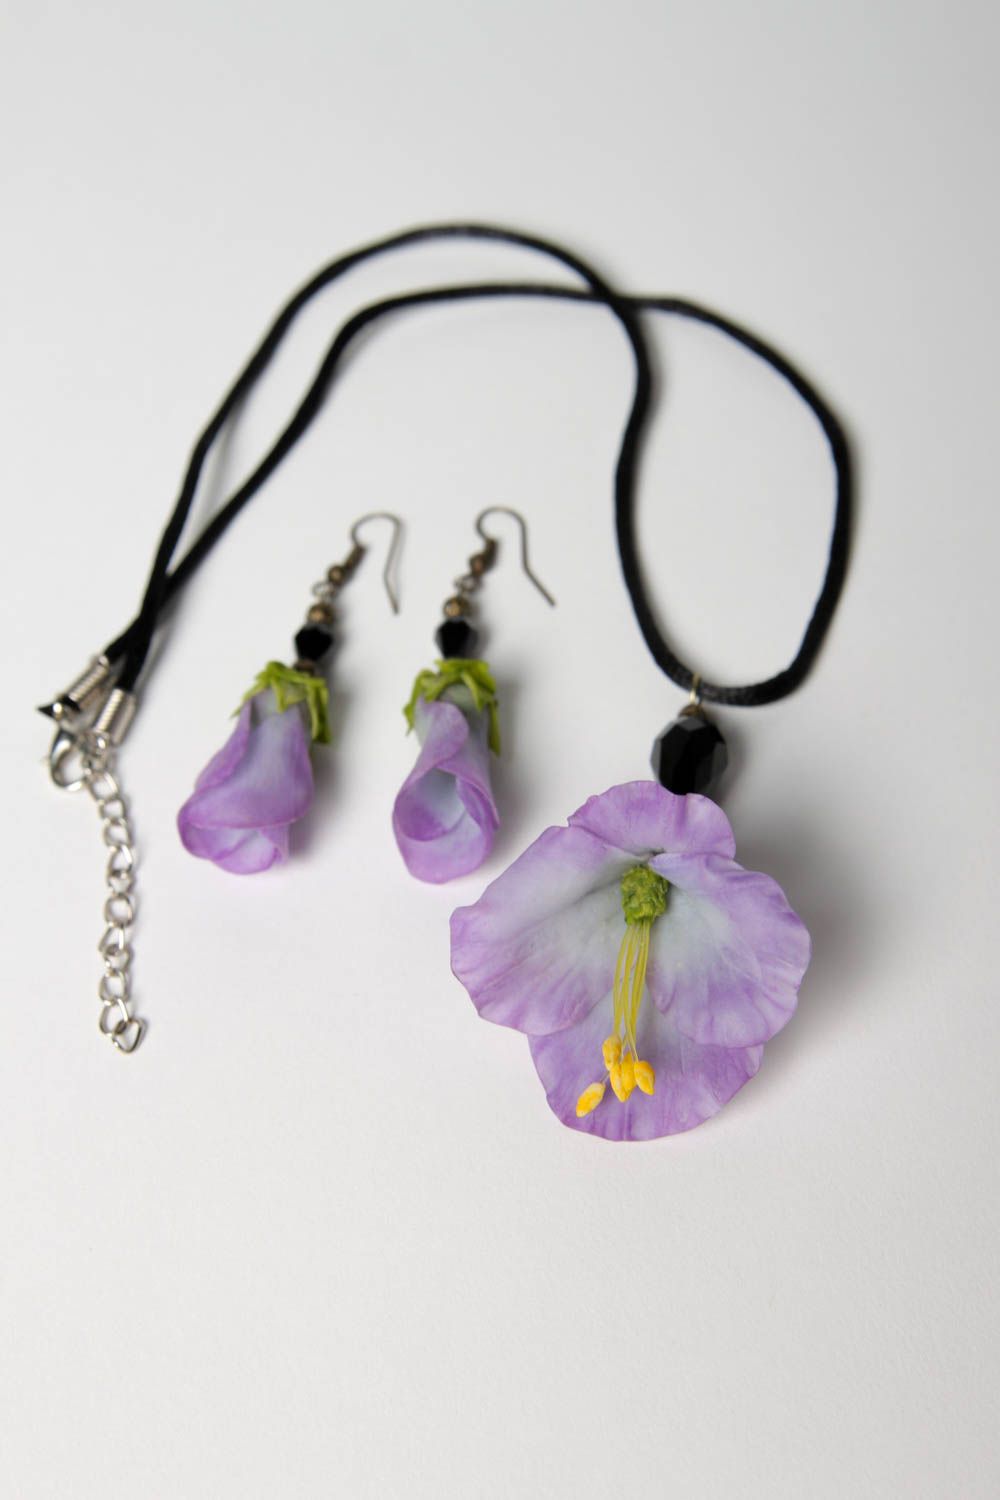 Handmade earrings designer pendant unusual jewelry set gift ideas for women photo 2